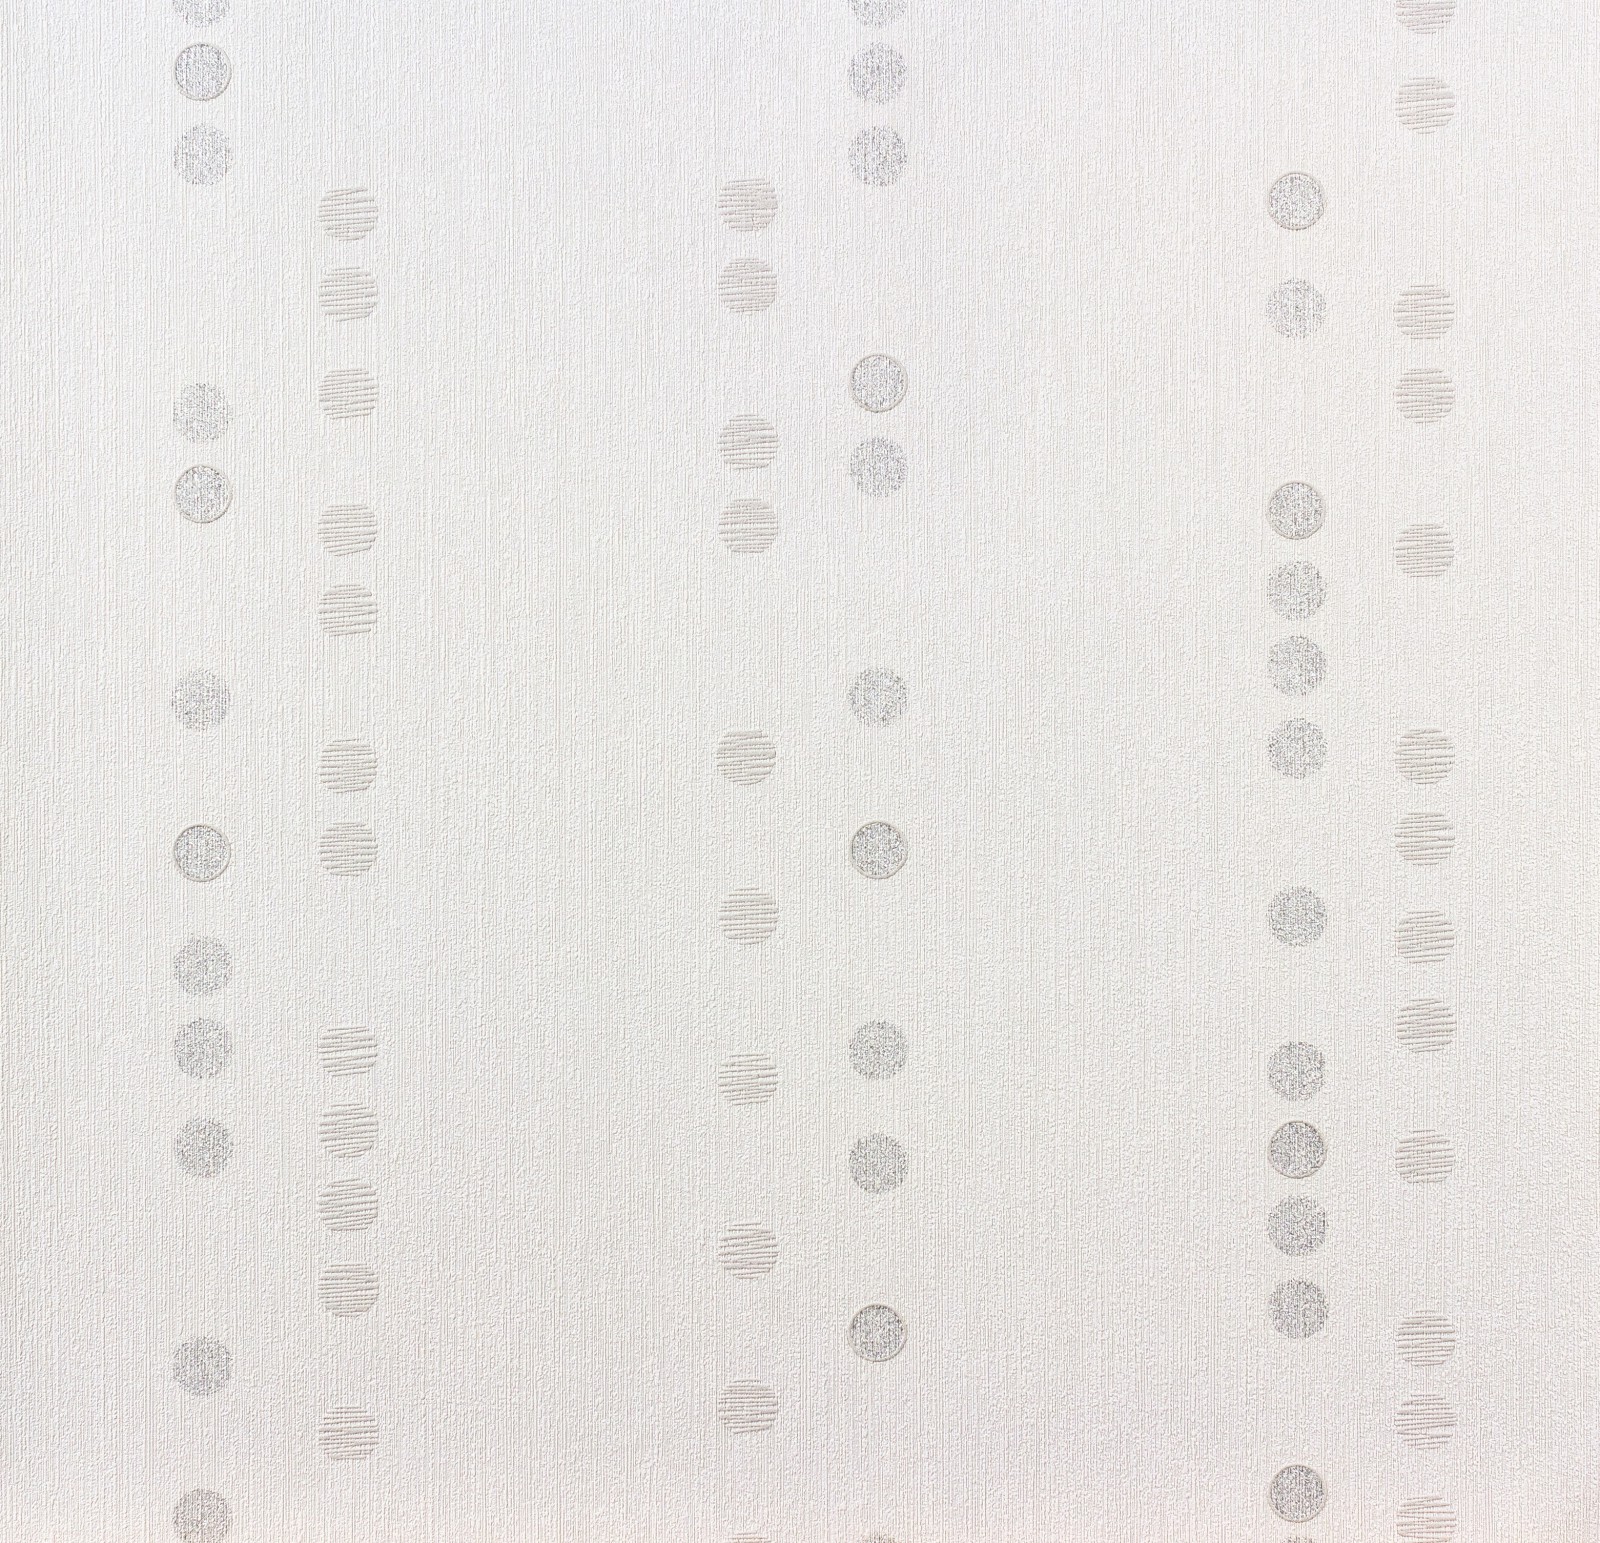  wallpaper 93825 1 938251 circles white silver Wallpaper livingwalls